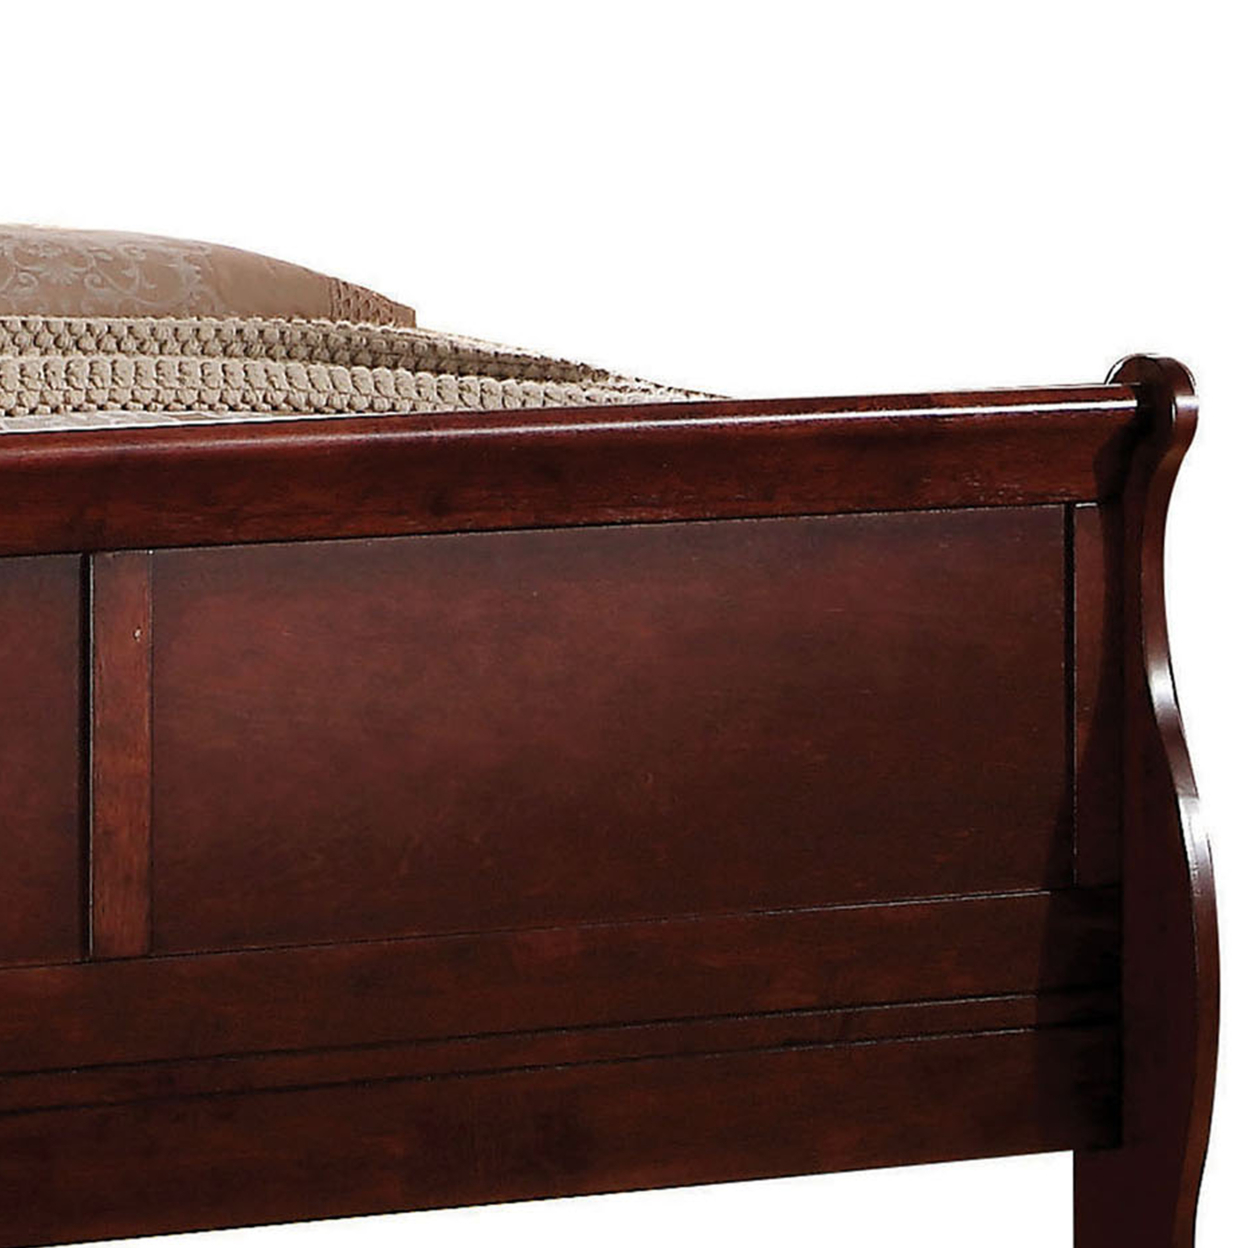 Transitional Panel Design Sleigh Full Size Bed, Cherry Brown- Saltoro Sherpi